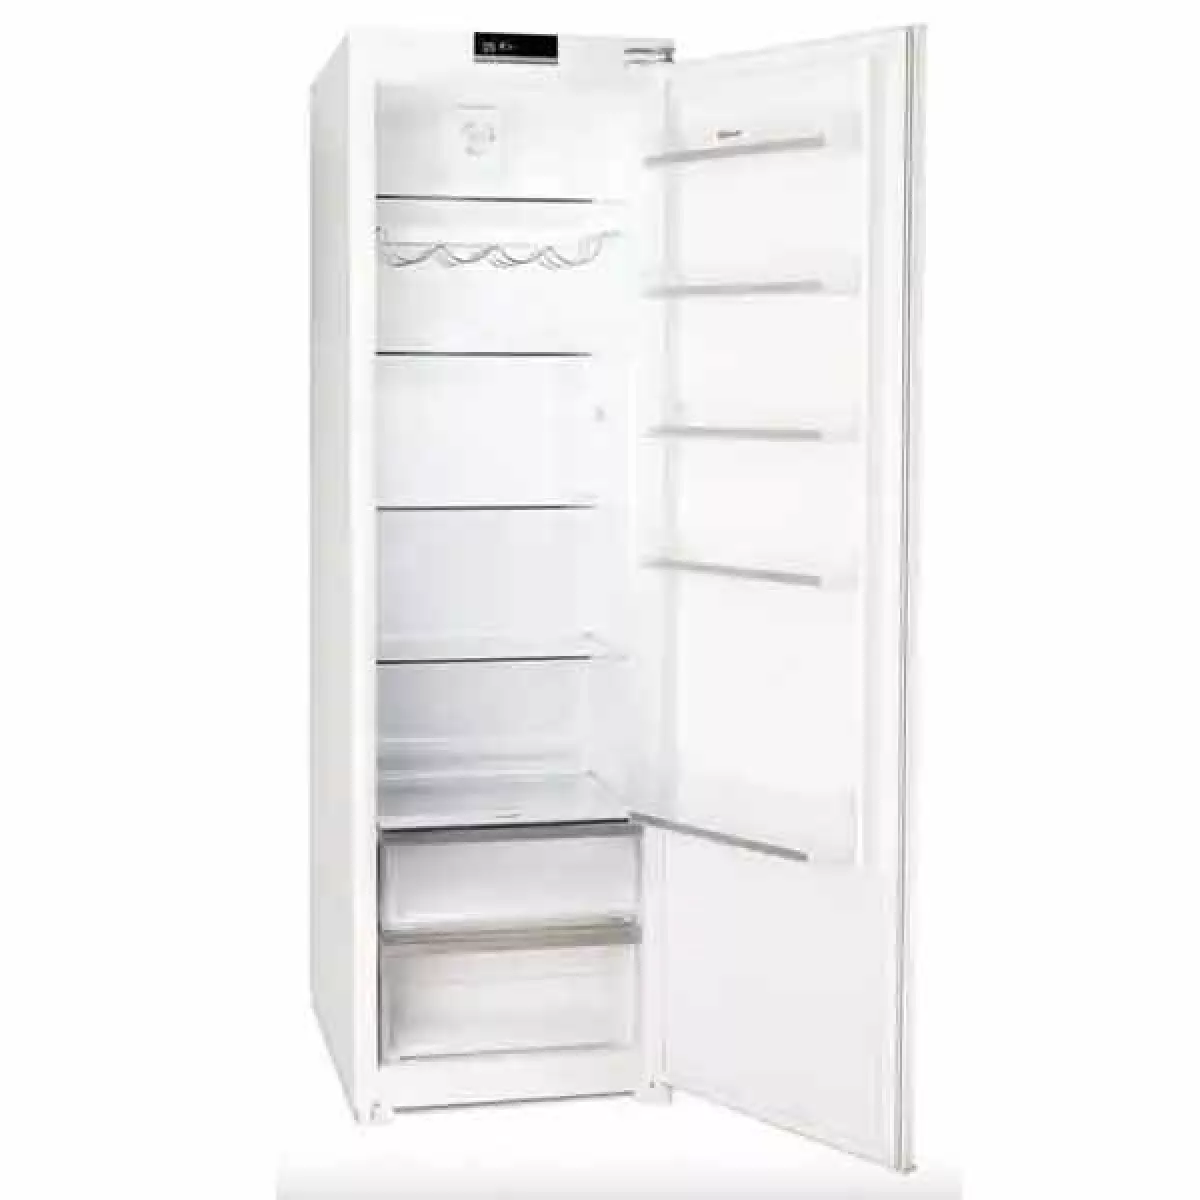 #1 - Gram KSI 401754/1 - Integrerbart køleskab